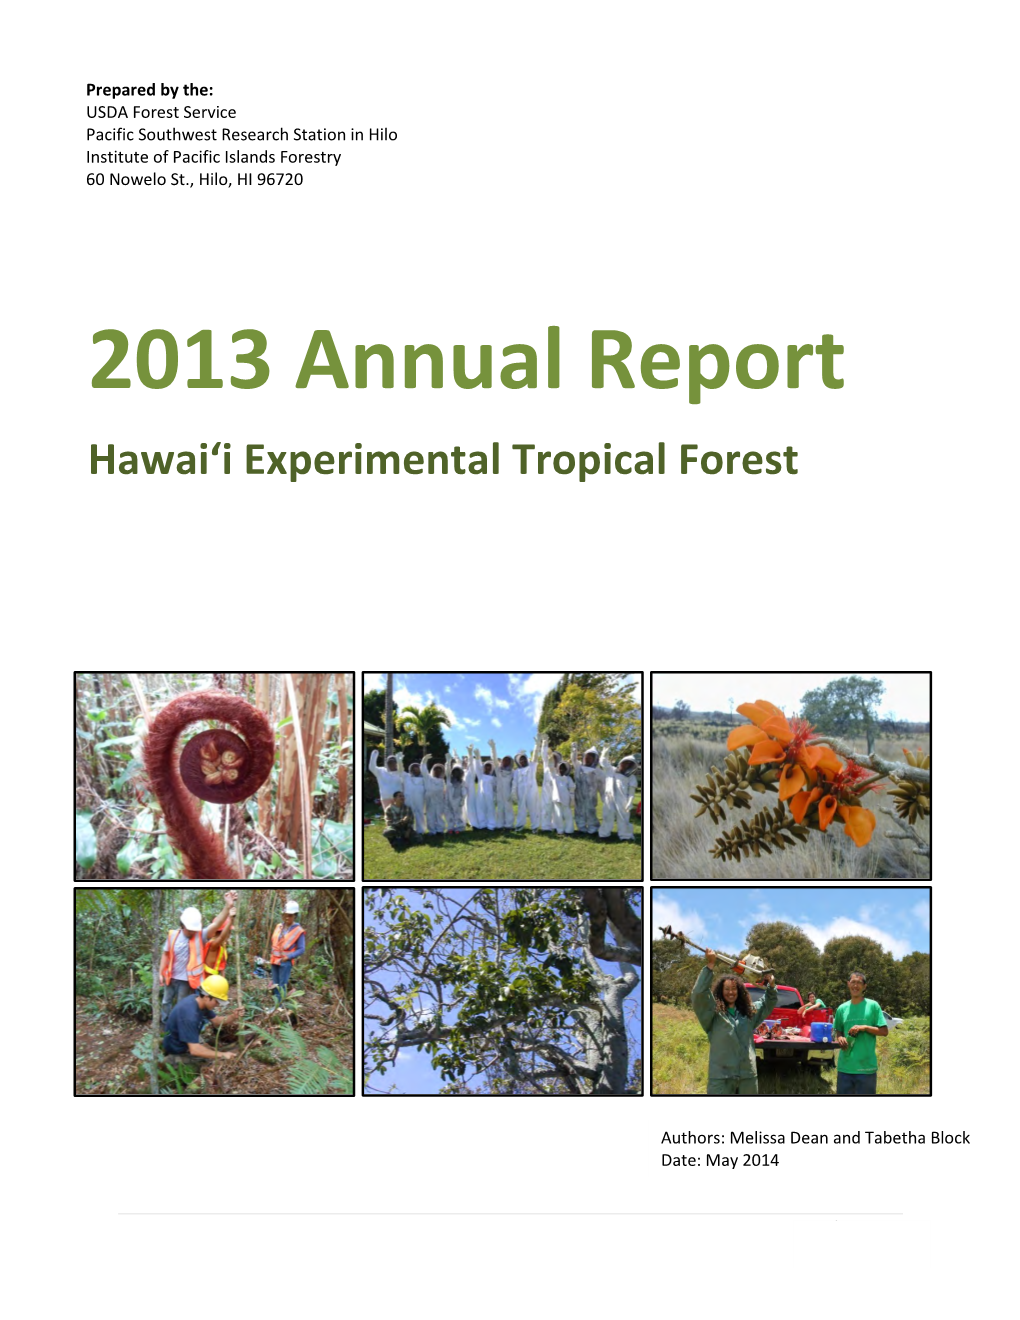 HETF 2013 Annual Report